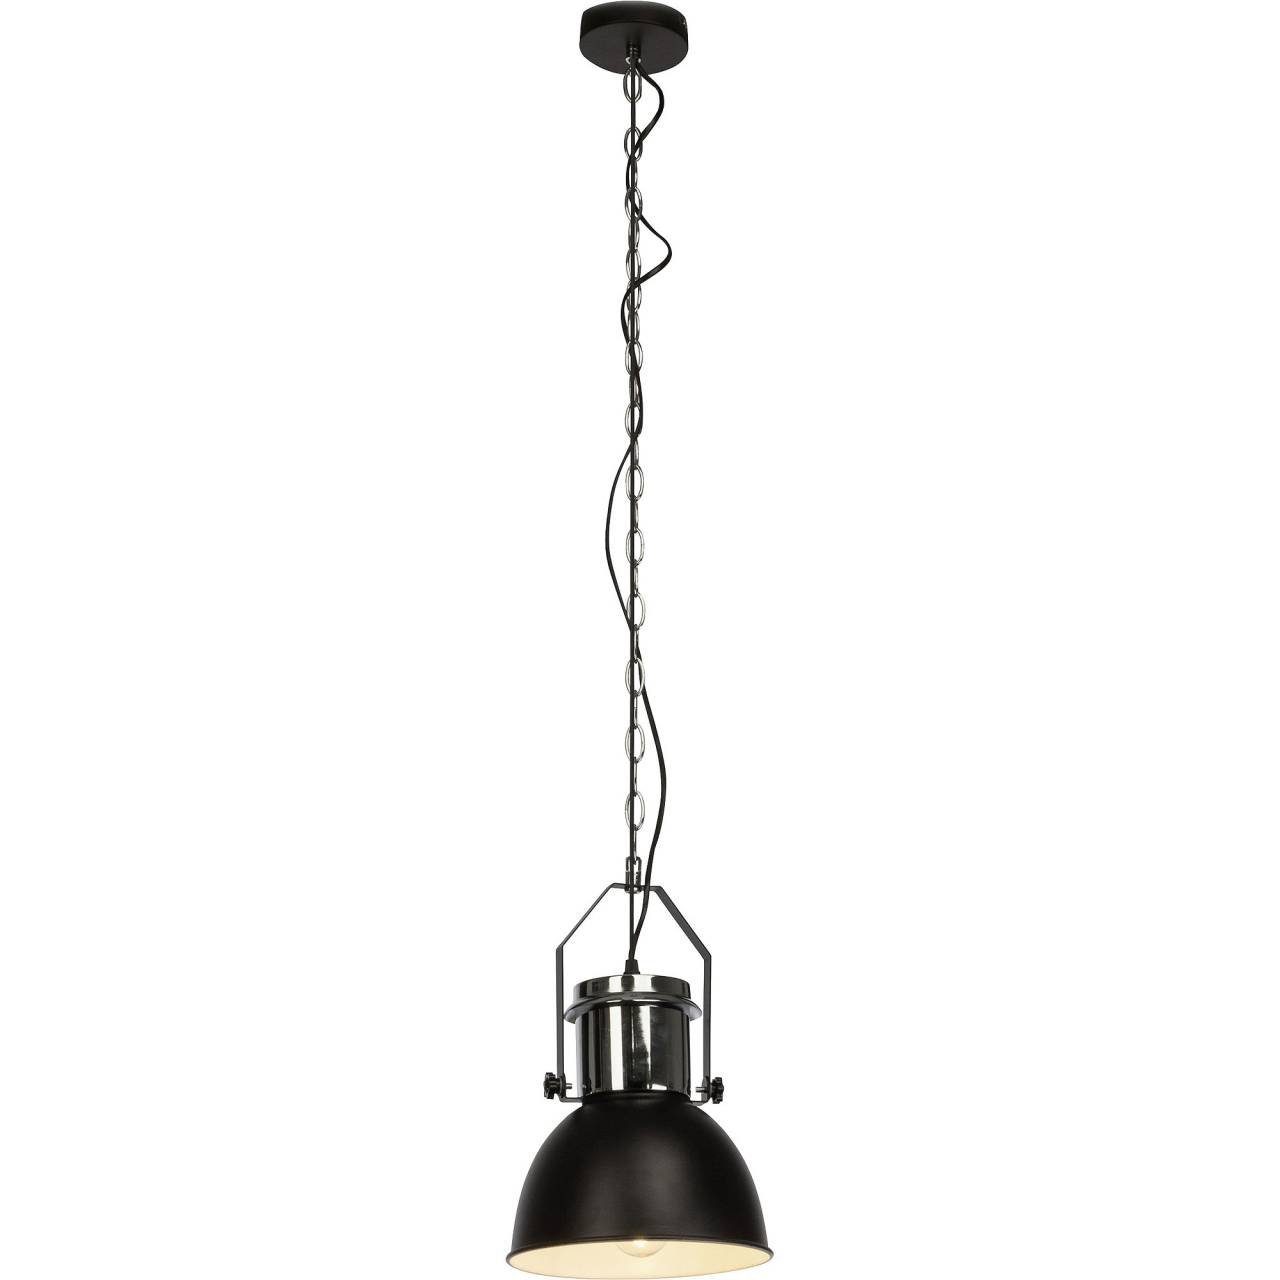 Brilliant Pendelleuchte Salford, Lampe schwarz/chrom gee E27, 1x Pendelleuchte Salford 60W, 23cm A60